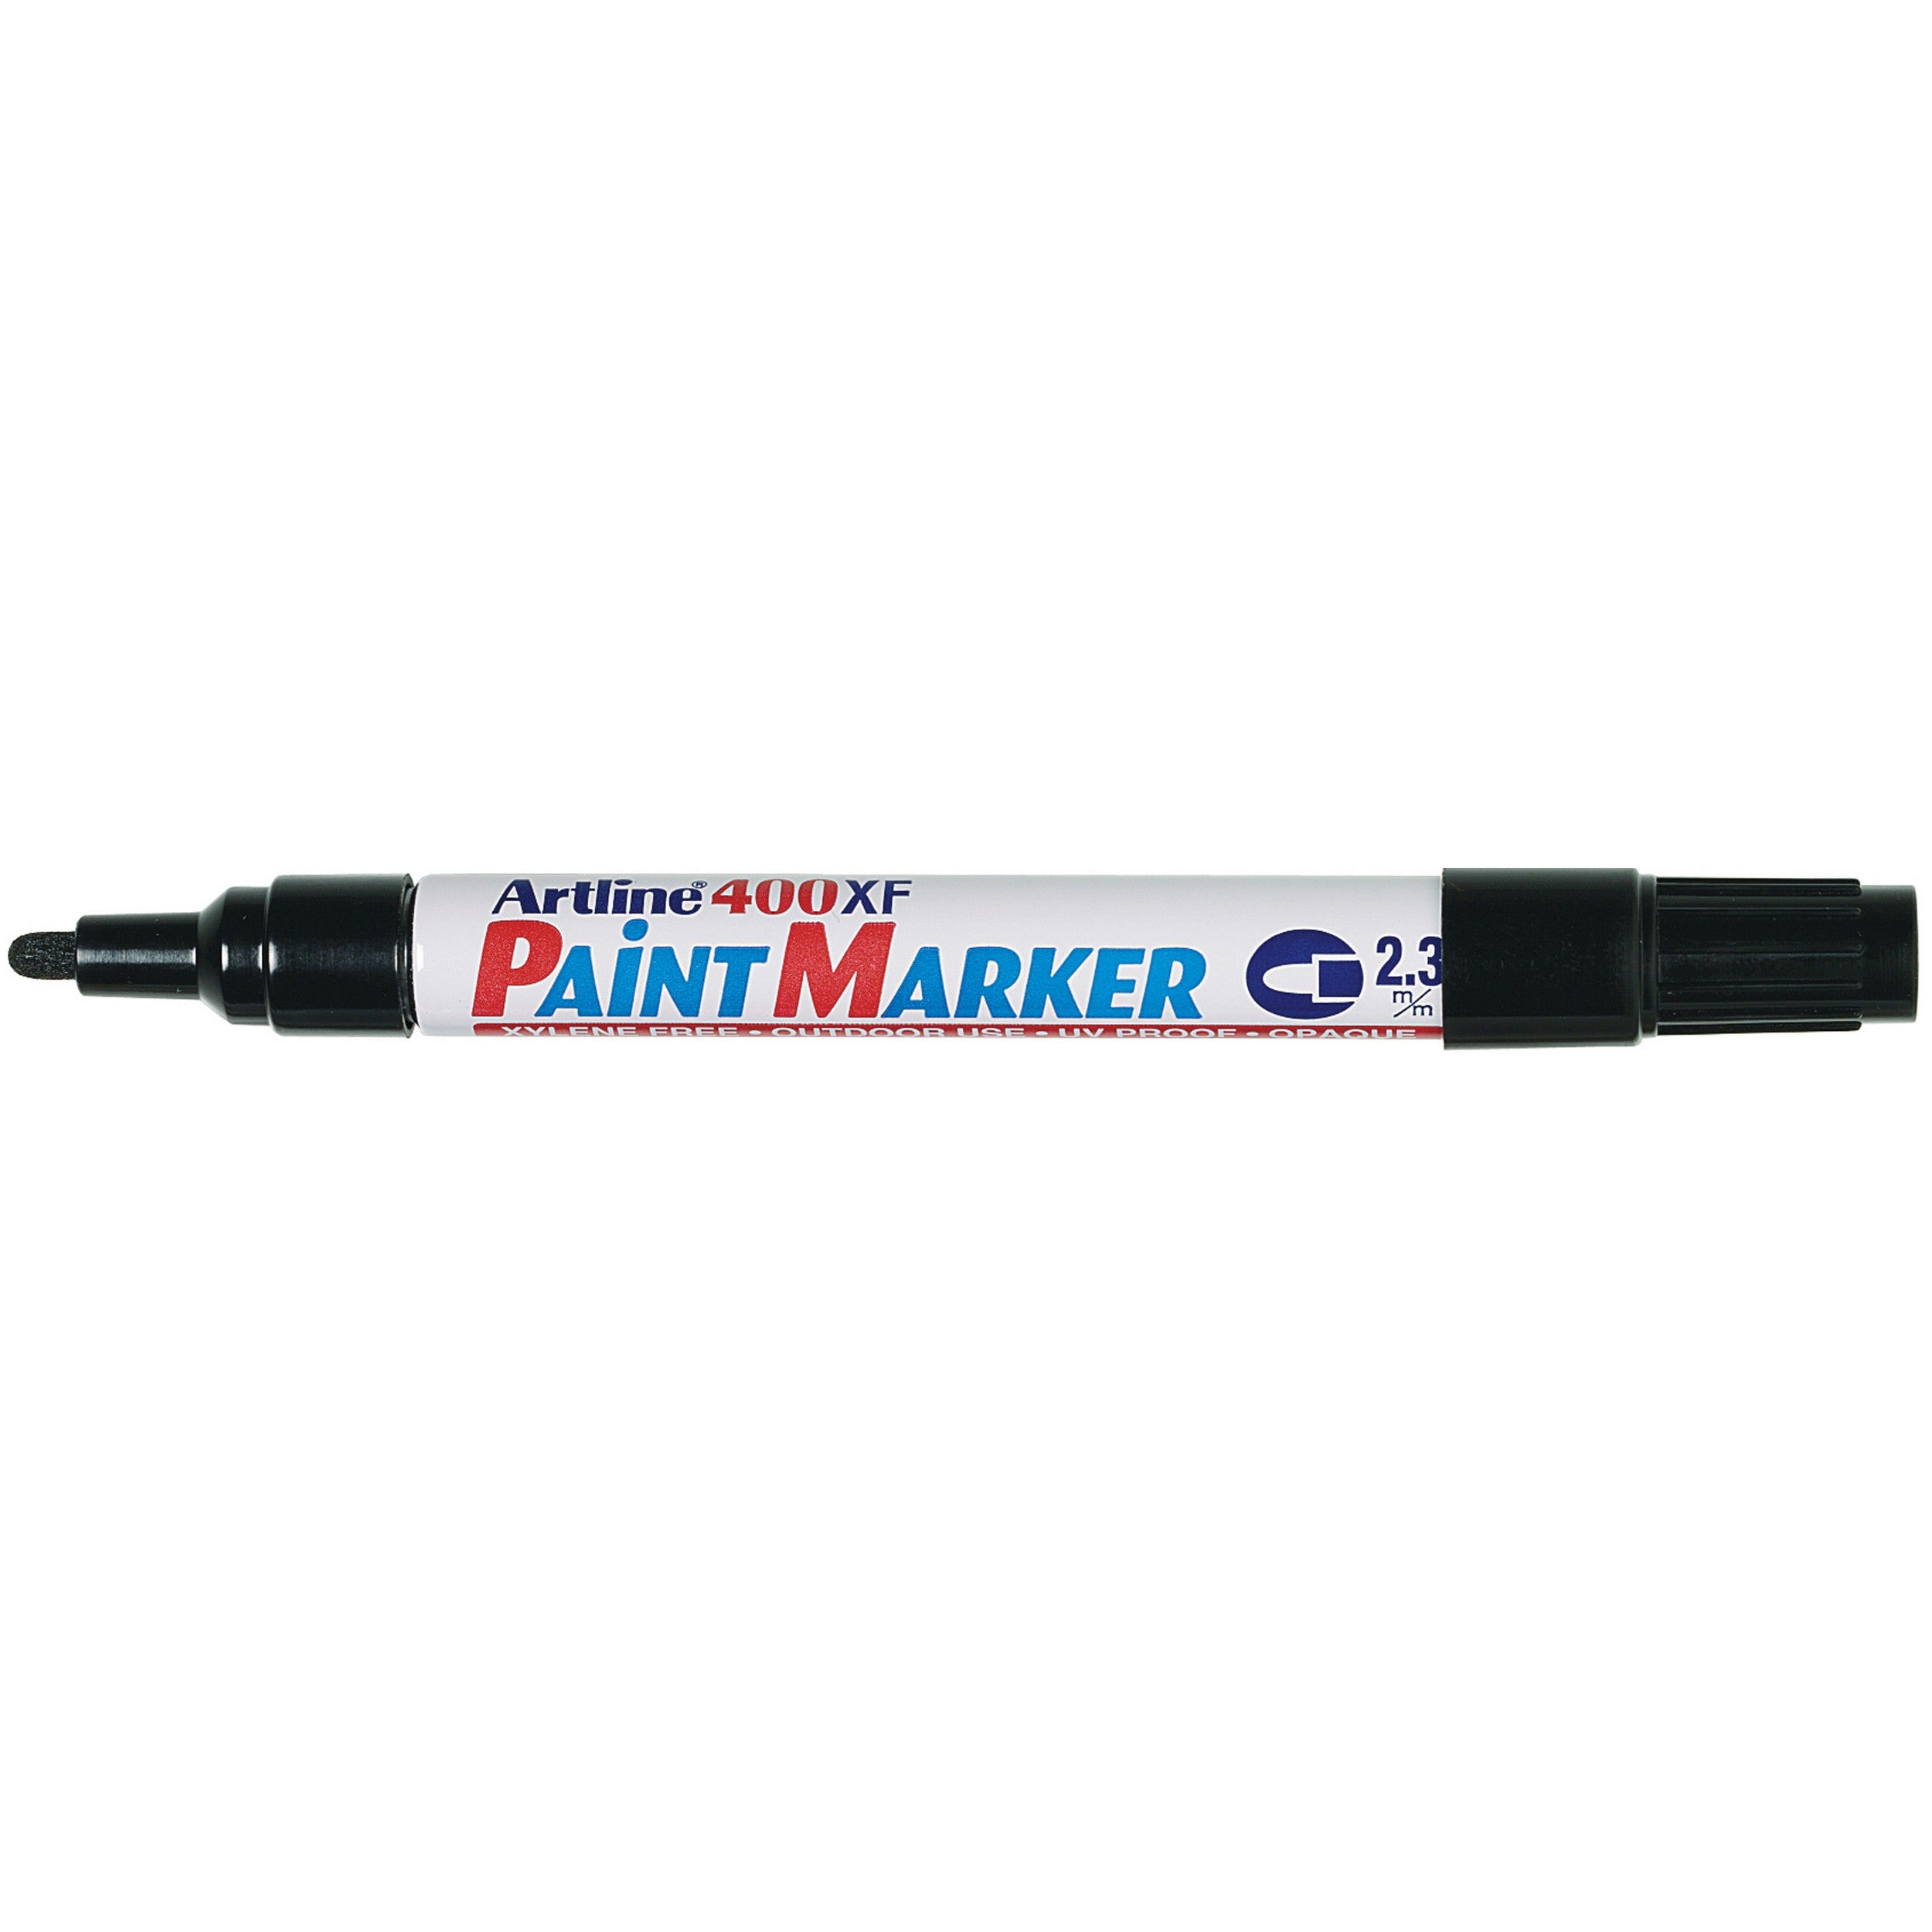 Artline Paint Marker 400XF, black, lid off